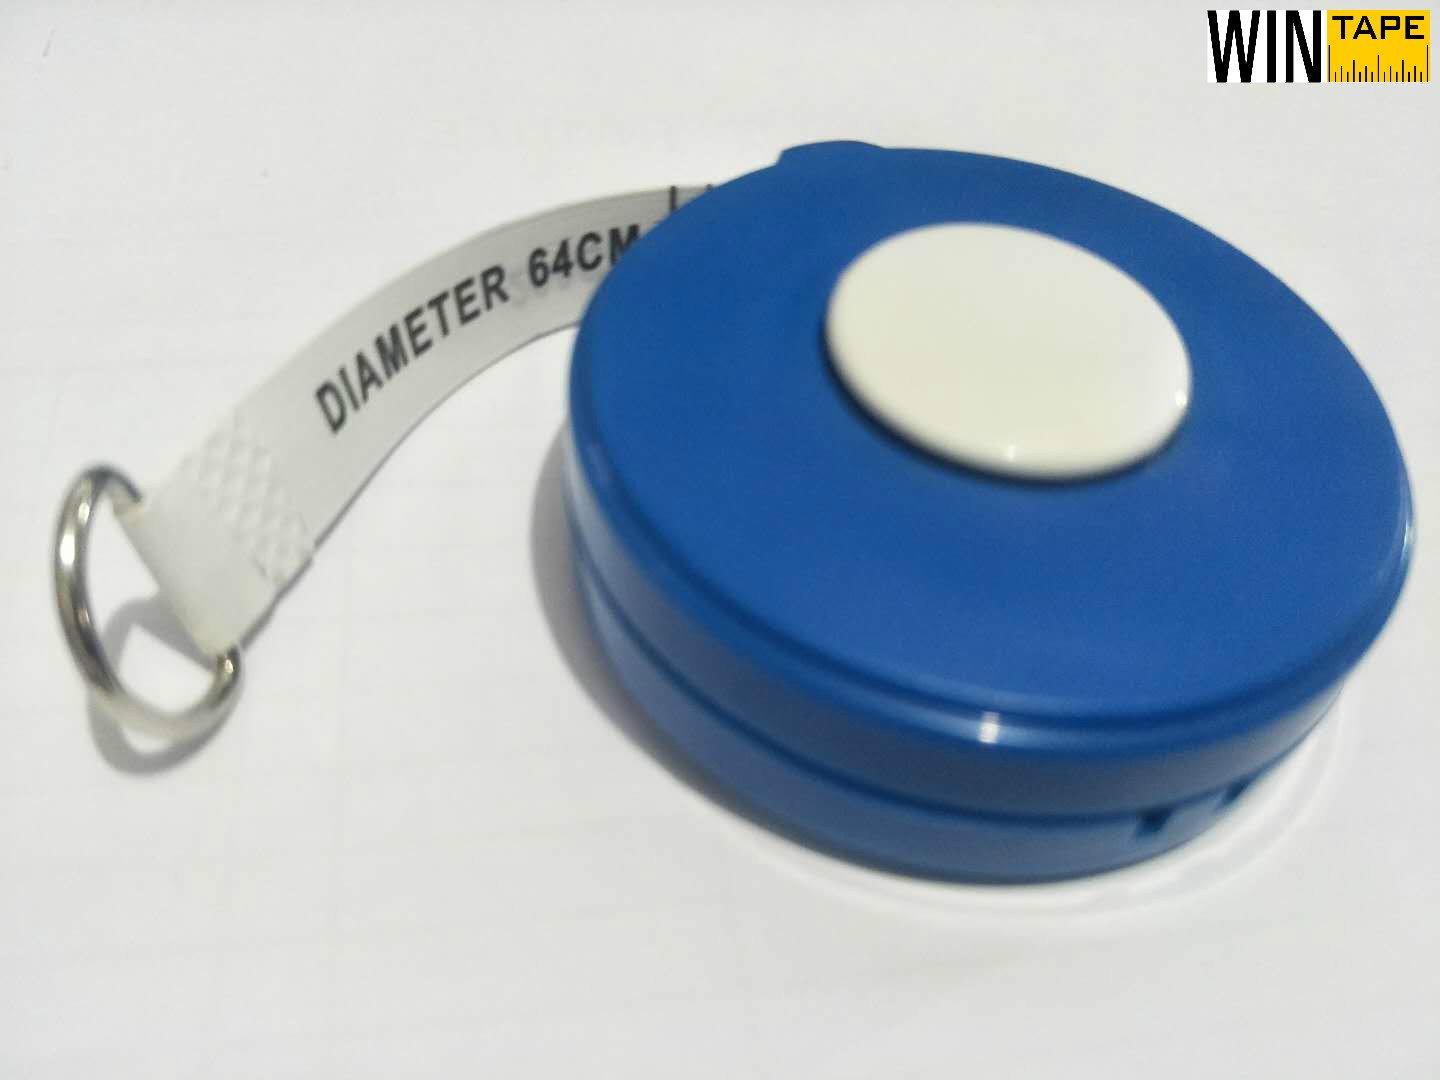 Wintape Diameter Tape Measure 200cm/64pi